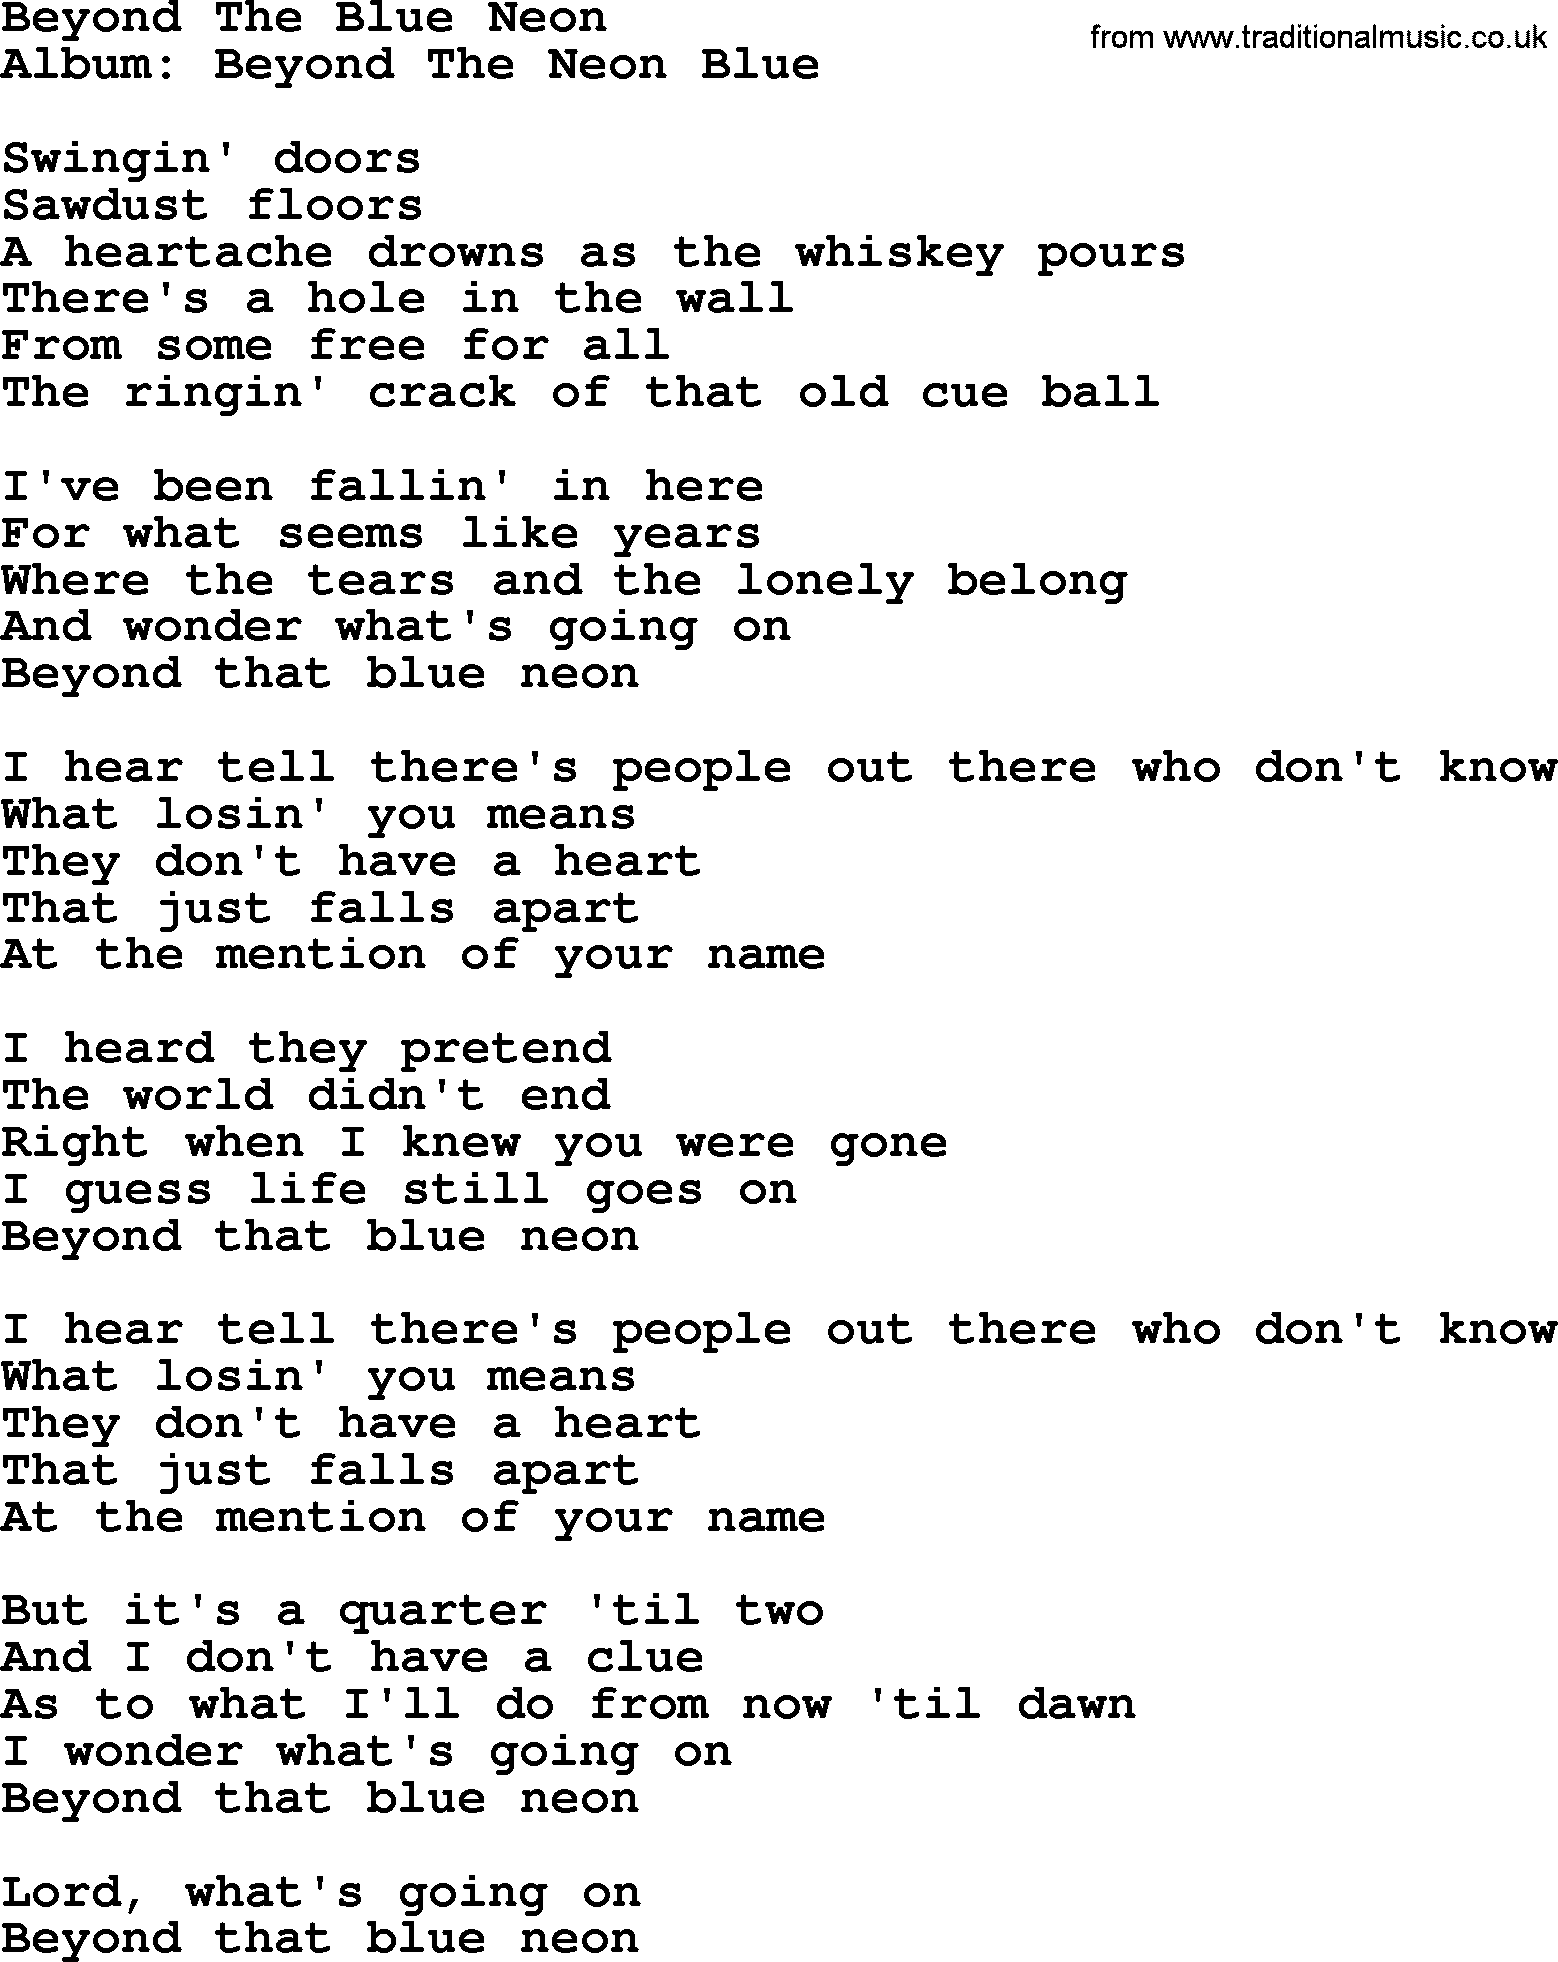 George Strait song: Beyond The Blue Neon, lyrics